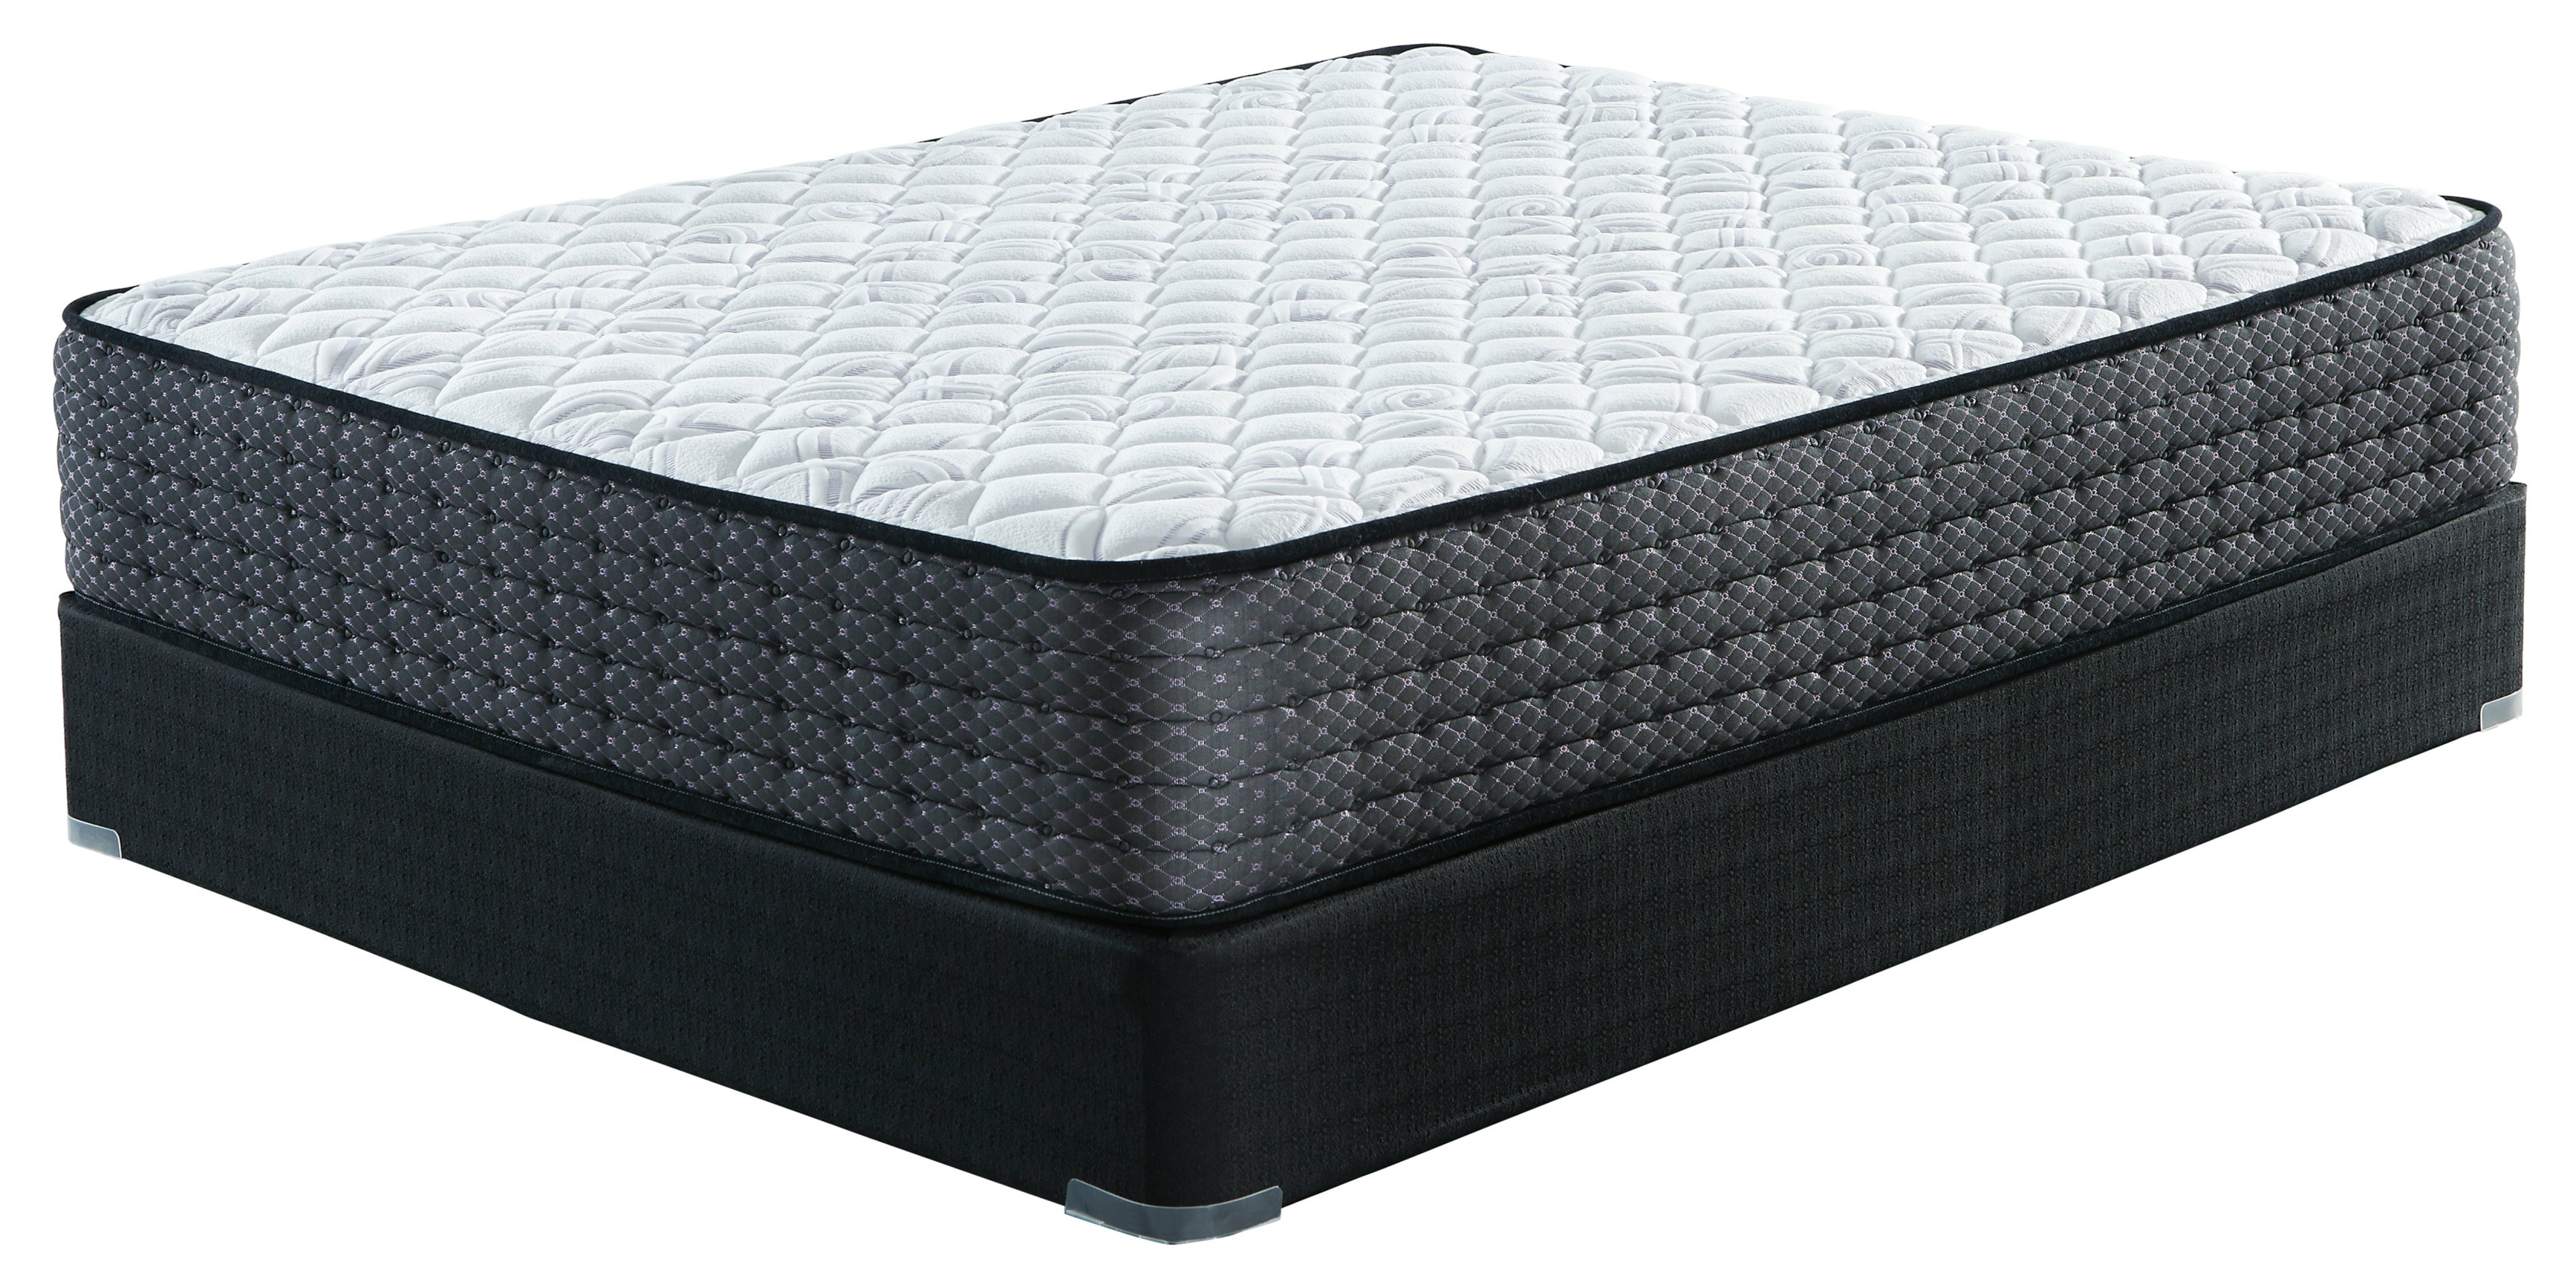 sierra sleep plush mattress and boxspring